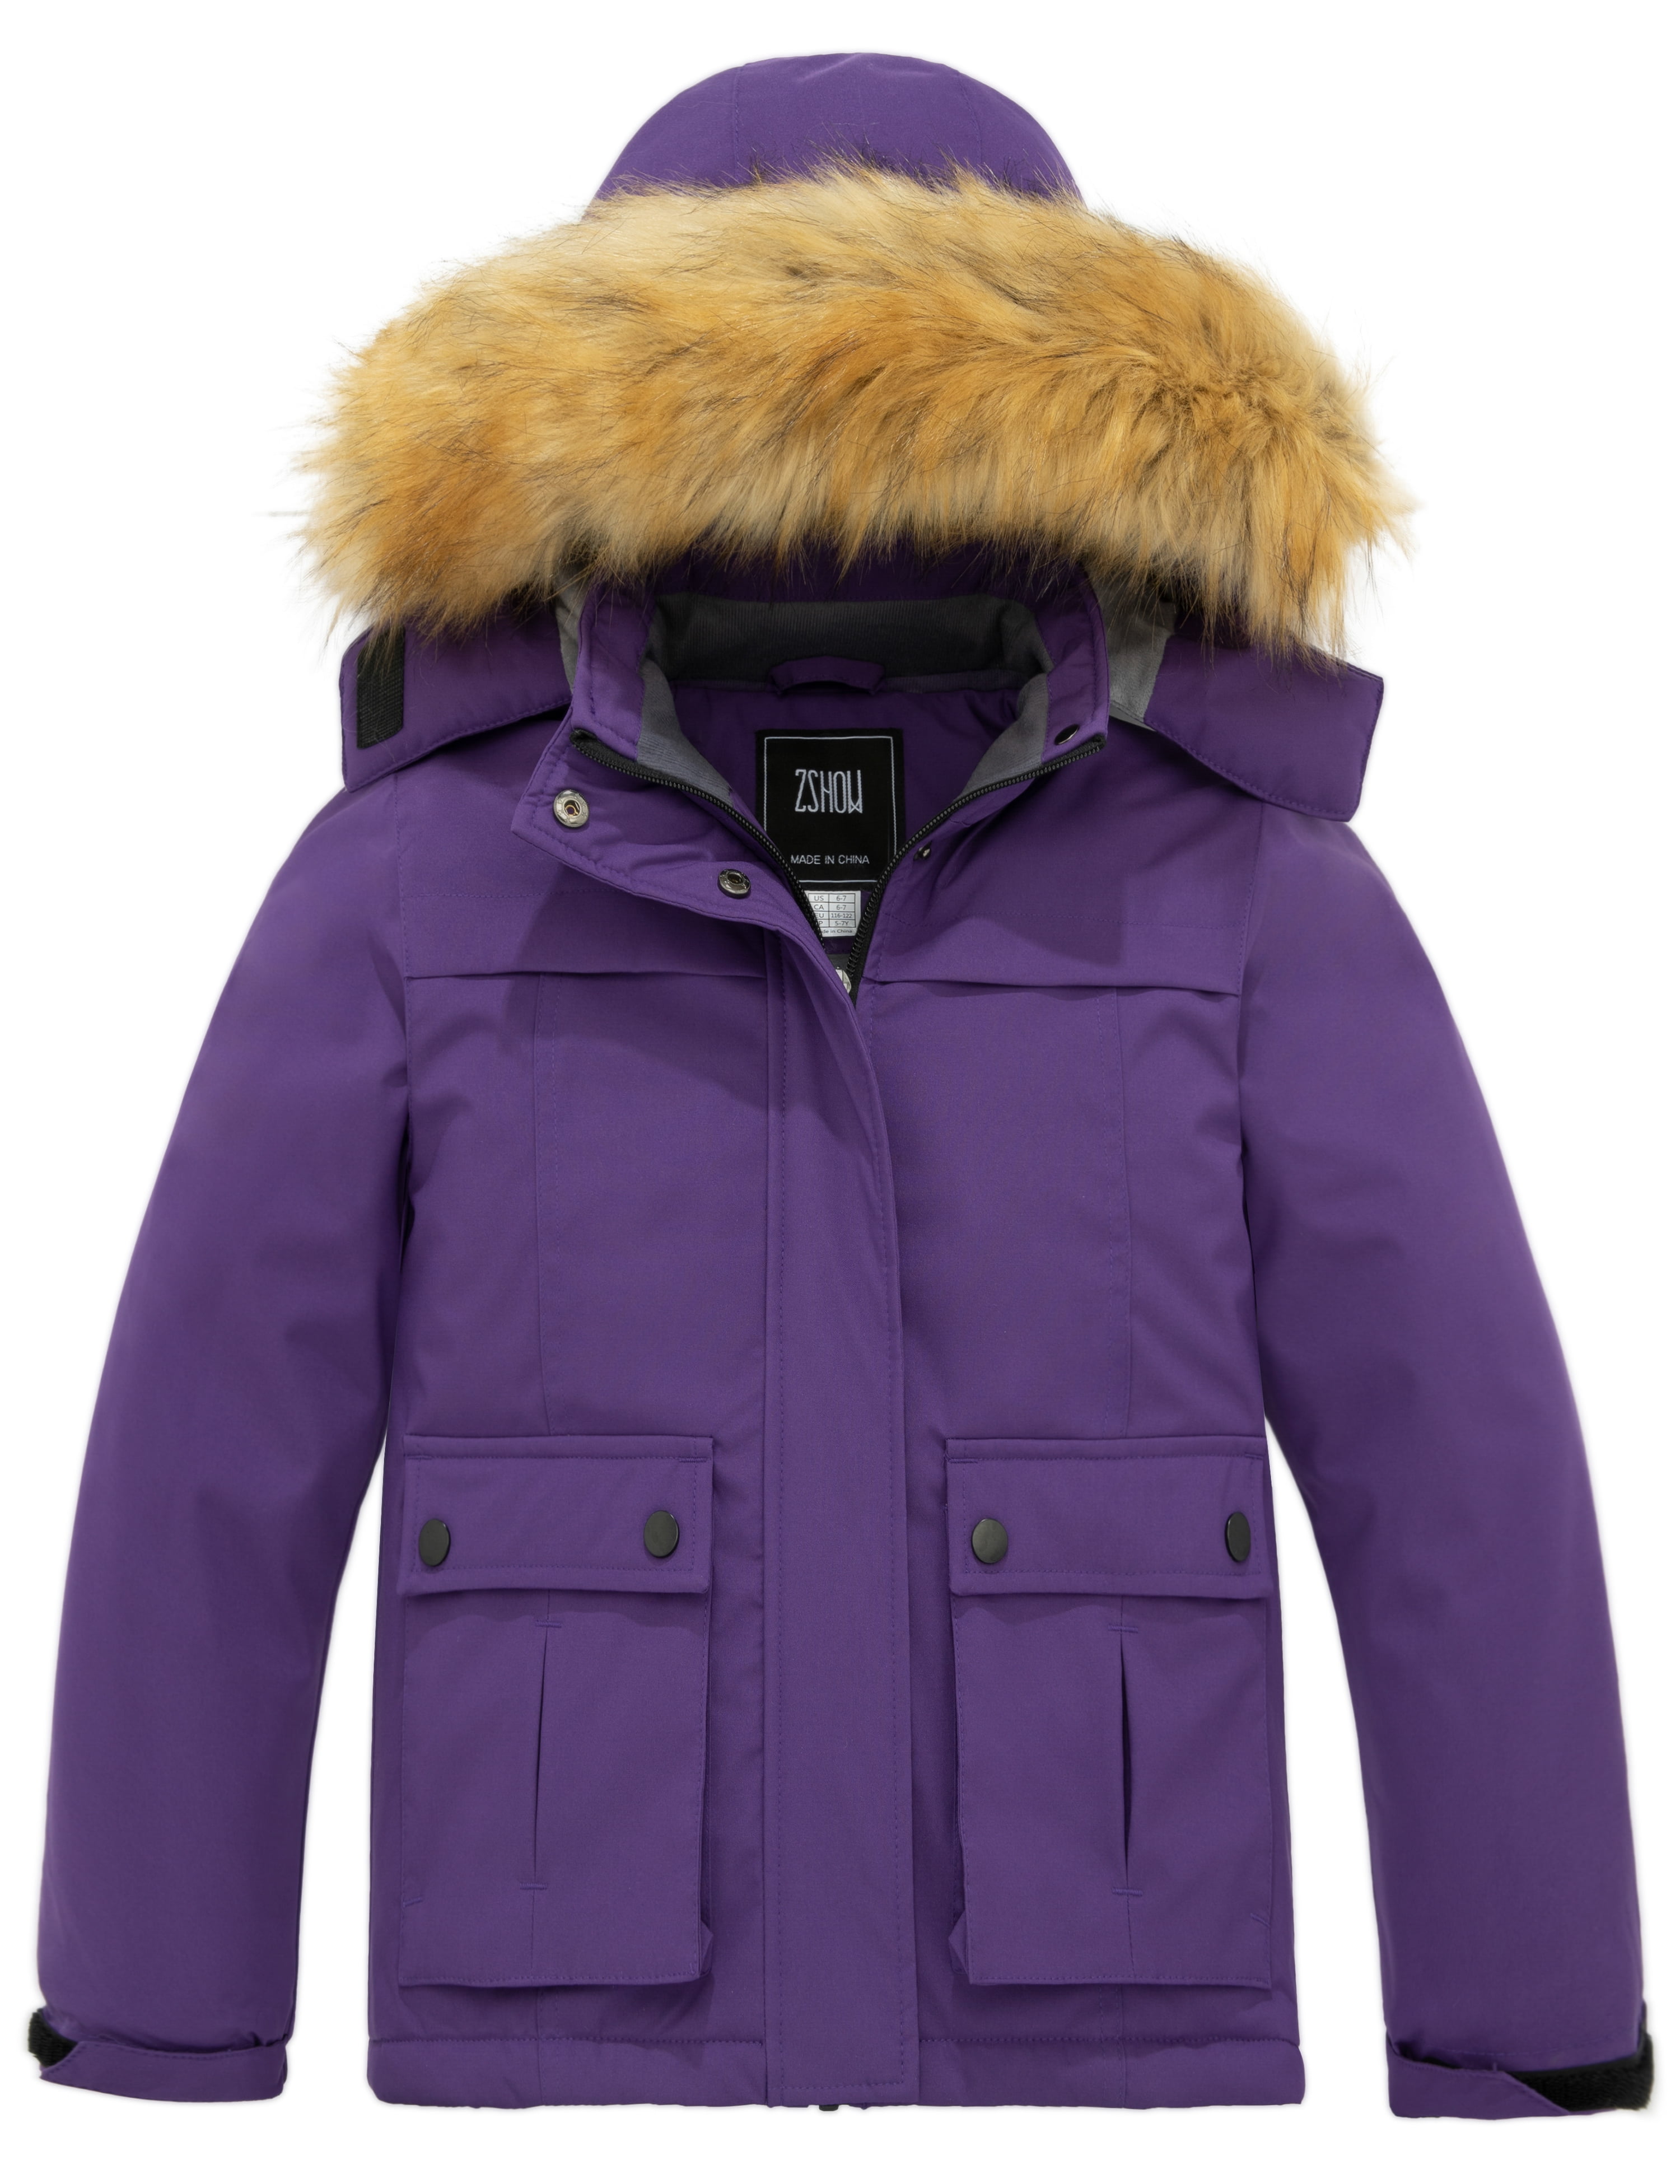 ZSHOW Girls' Waterproof Ski Jacket Warm Fleece Lined Thick Padded Winter Coat 